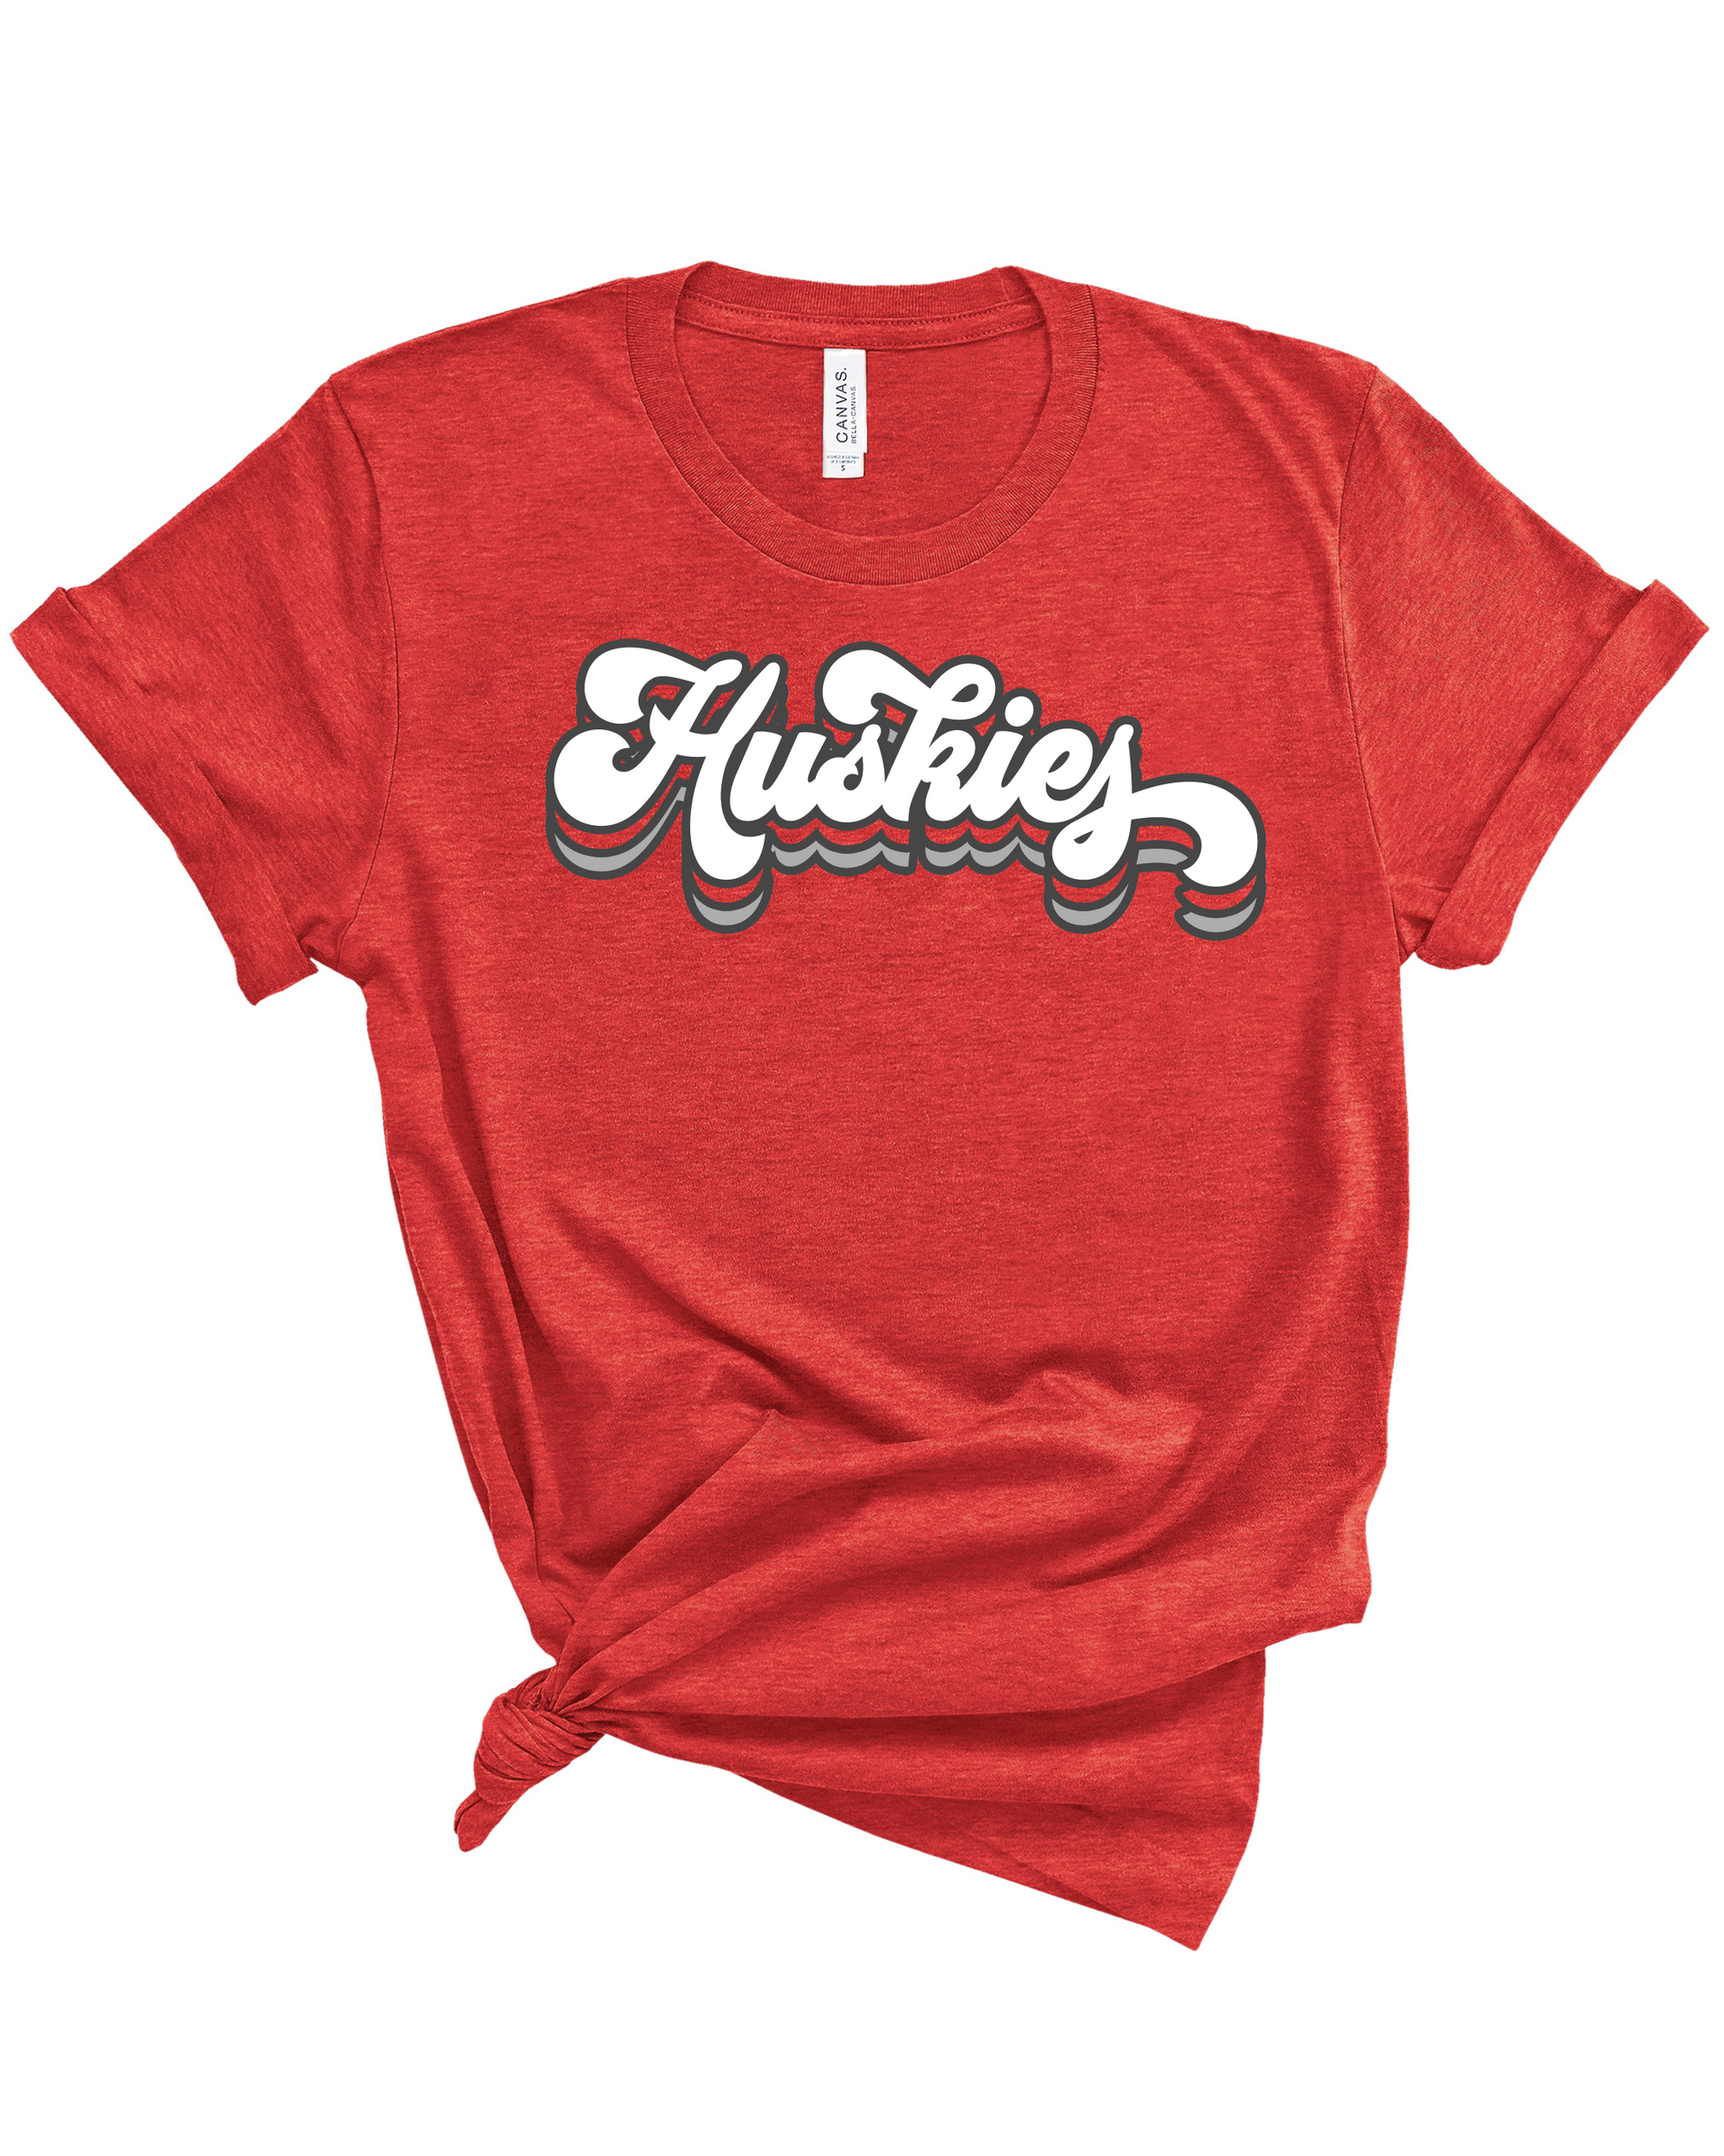 Groovy Huskies | Adult Tee-Adult Tee-Sister Shirts-Sister Shirts, Cute & Custom Tees for Mama & Littles in Trussville, Alabama.